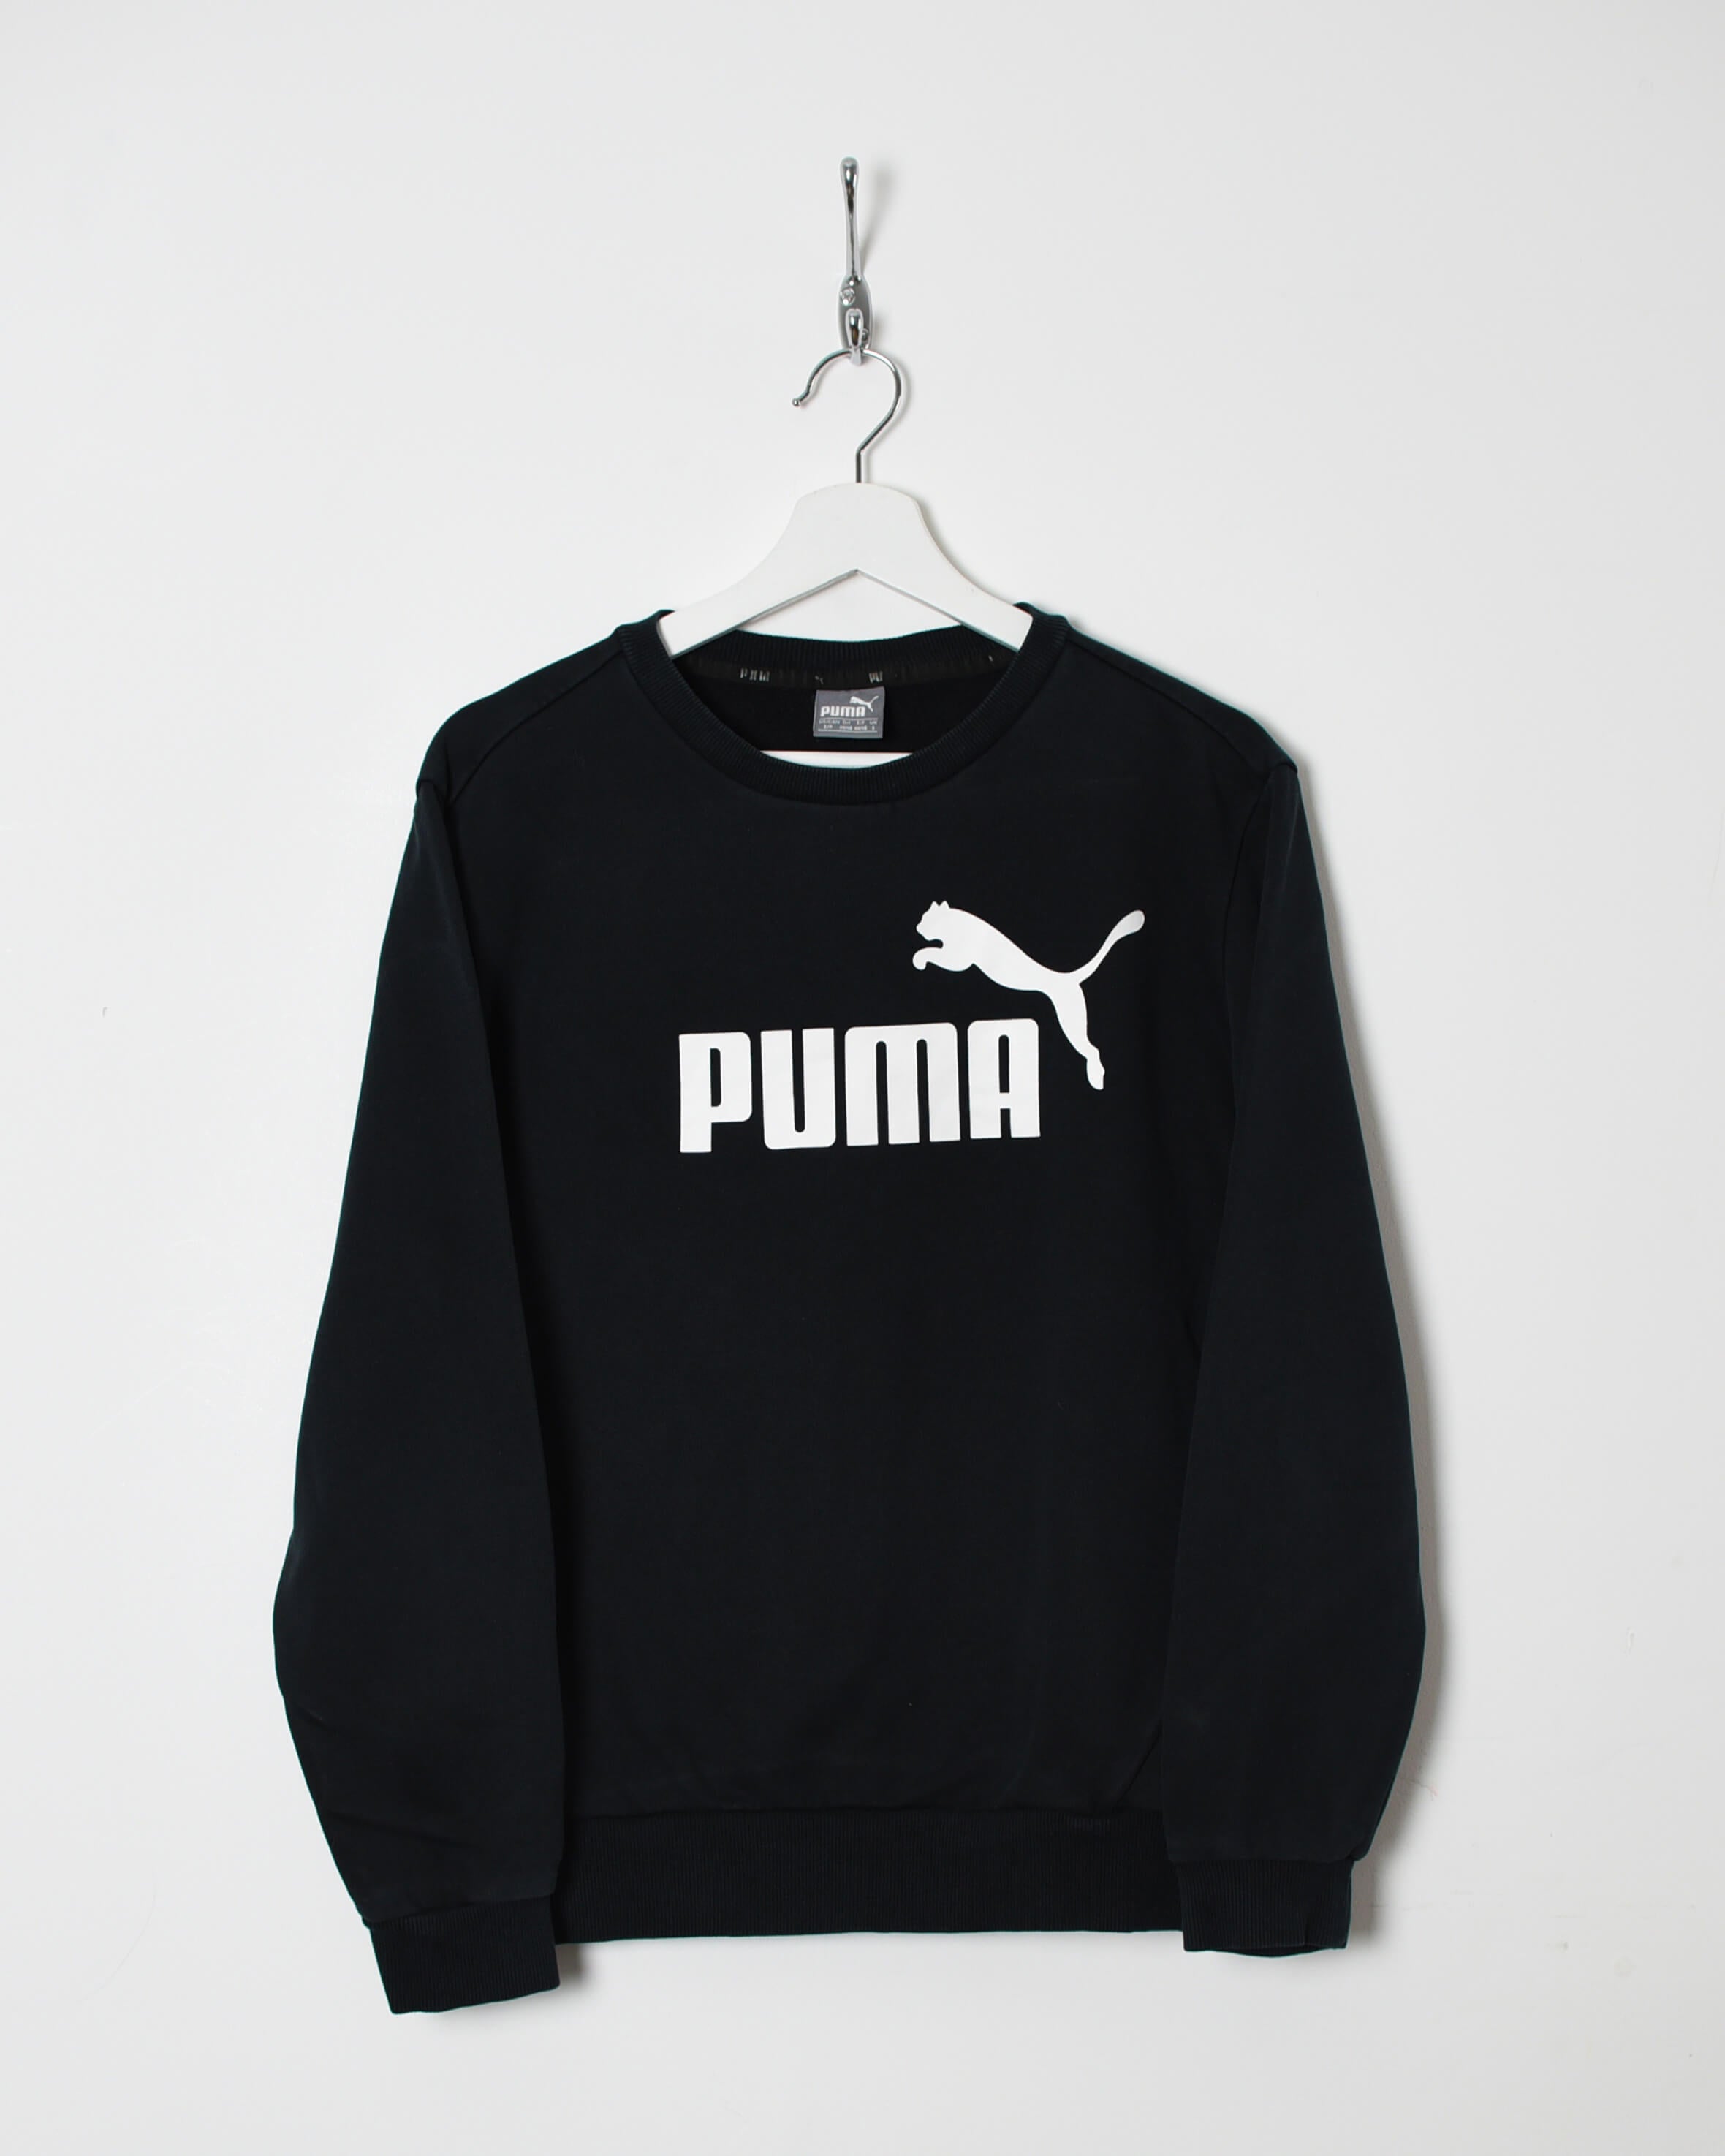 Puma Sweatshirt - Small - Domno Vintage 90s, 80s, 00s Retro and Vintage Clothing 